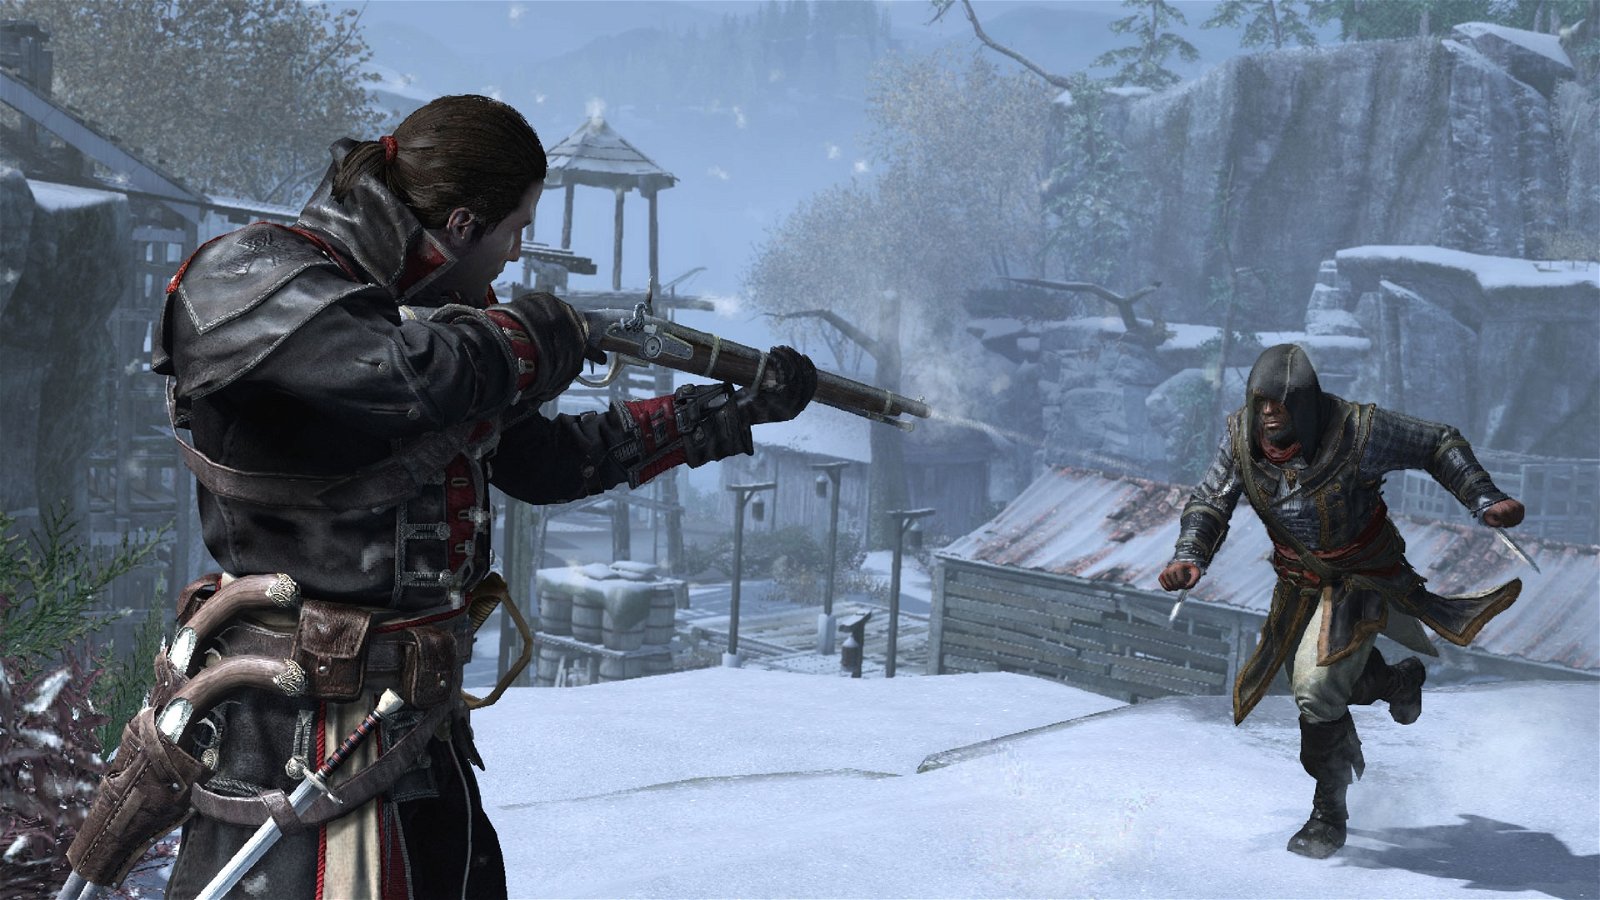 Análisis de Assassin’s Creed Rogue: Remastered - La otra cara de la moneda